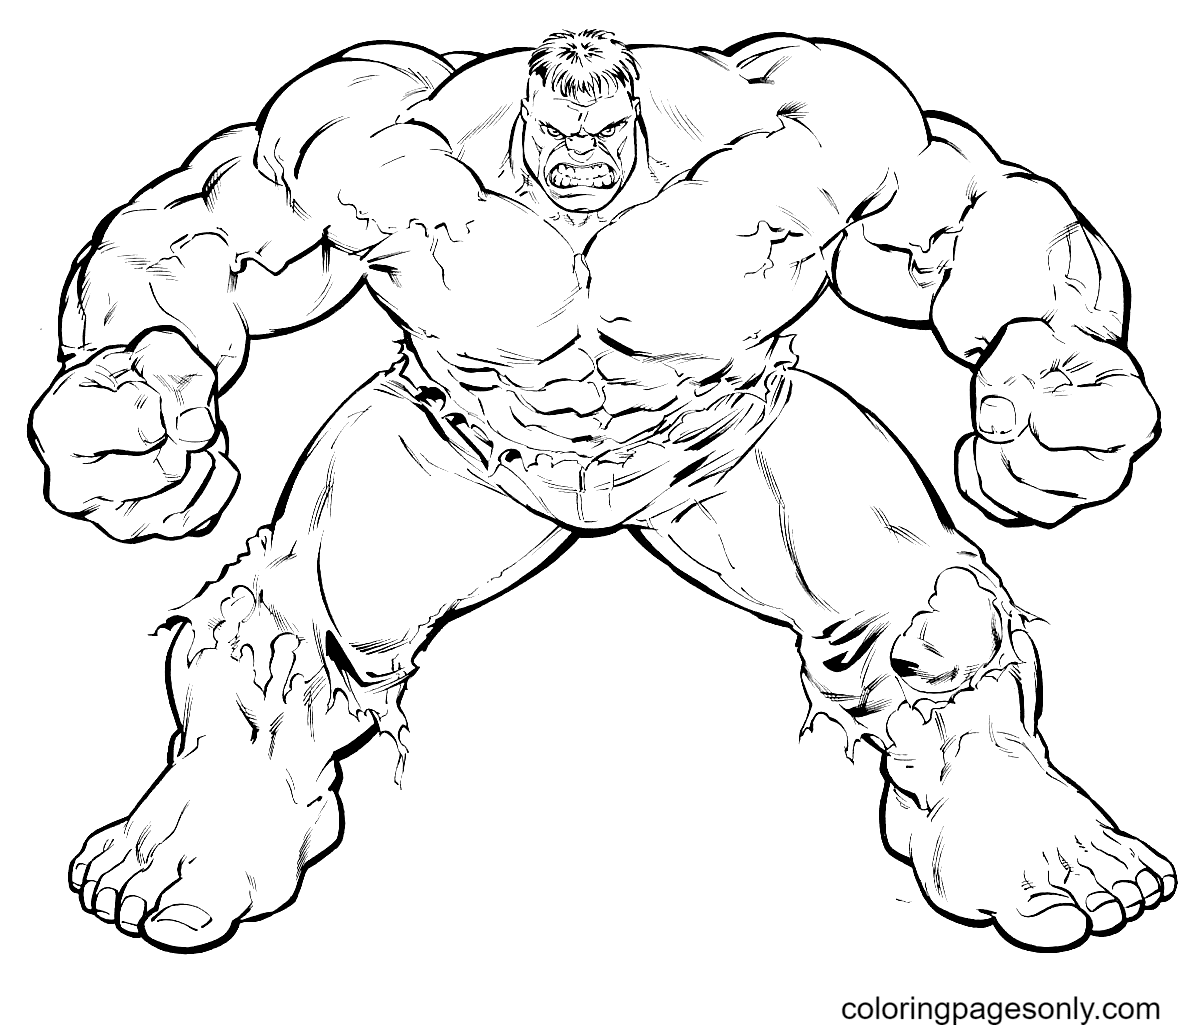 Incredible Hulk Hulk Coloring Pages - Free Printable Templates